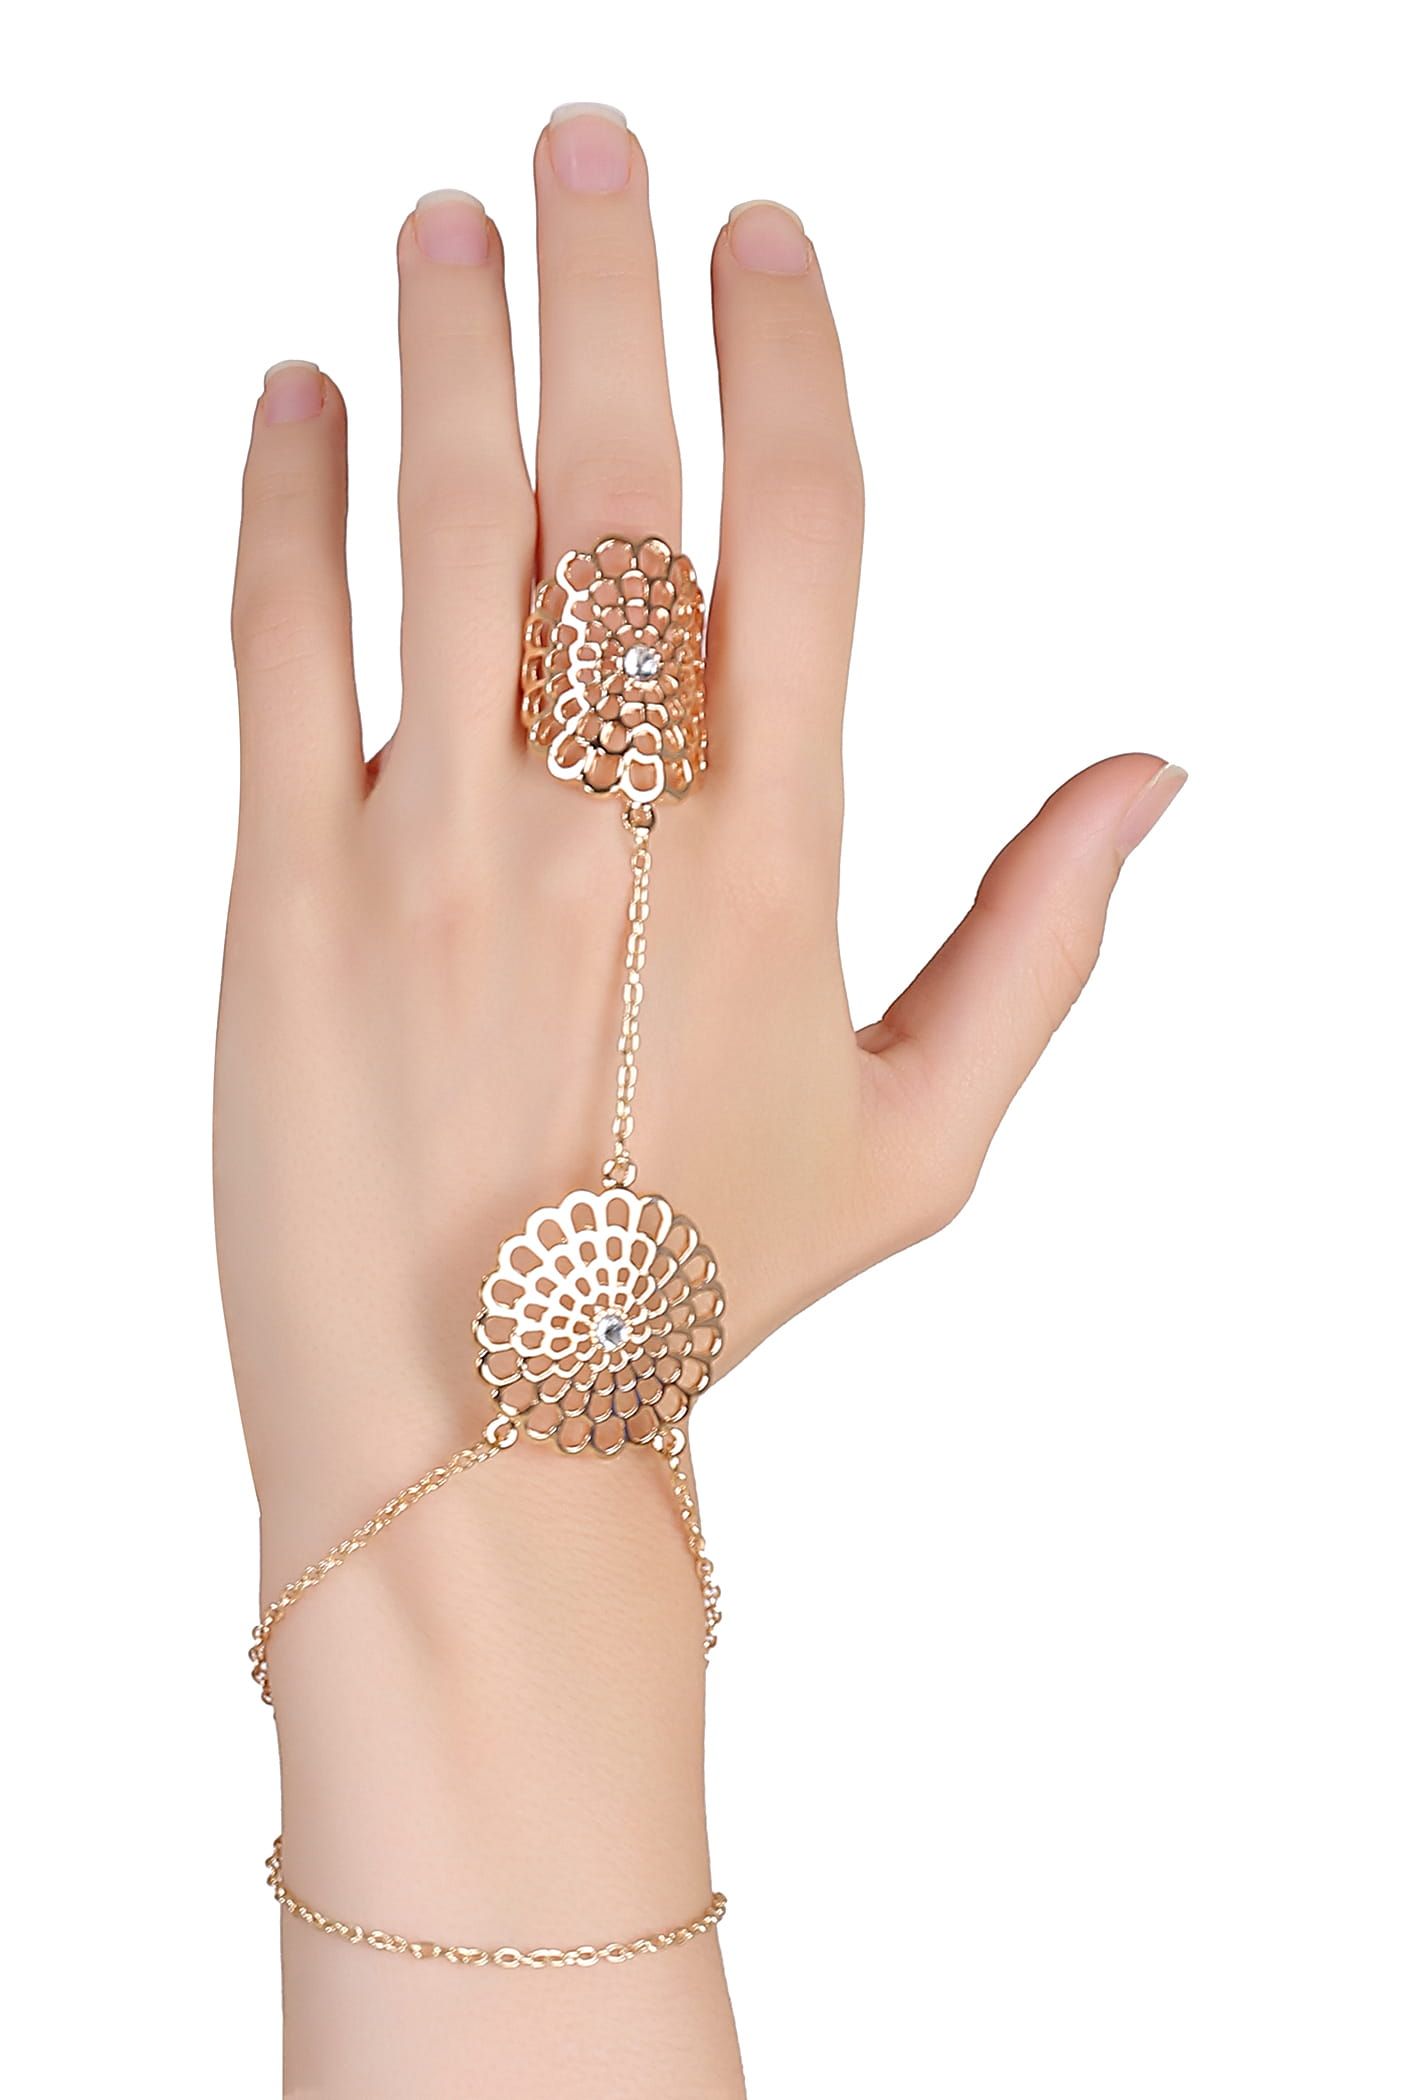 Buy Silver Hand Chain Bracelet online - Best Price in Kenya | Jumia KE